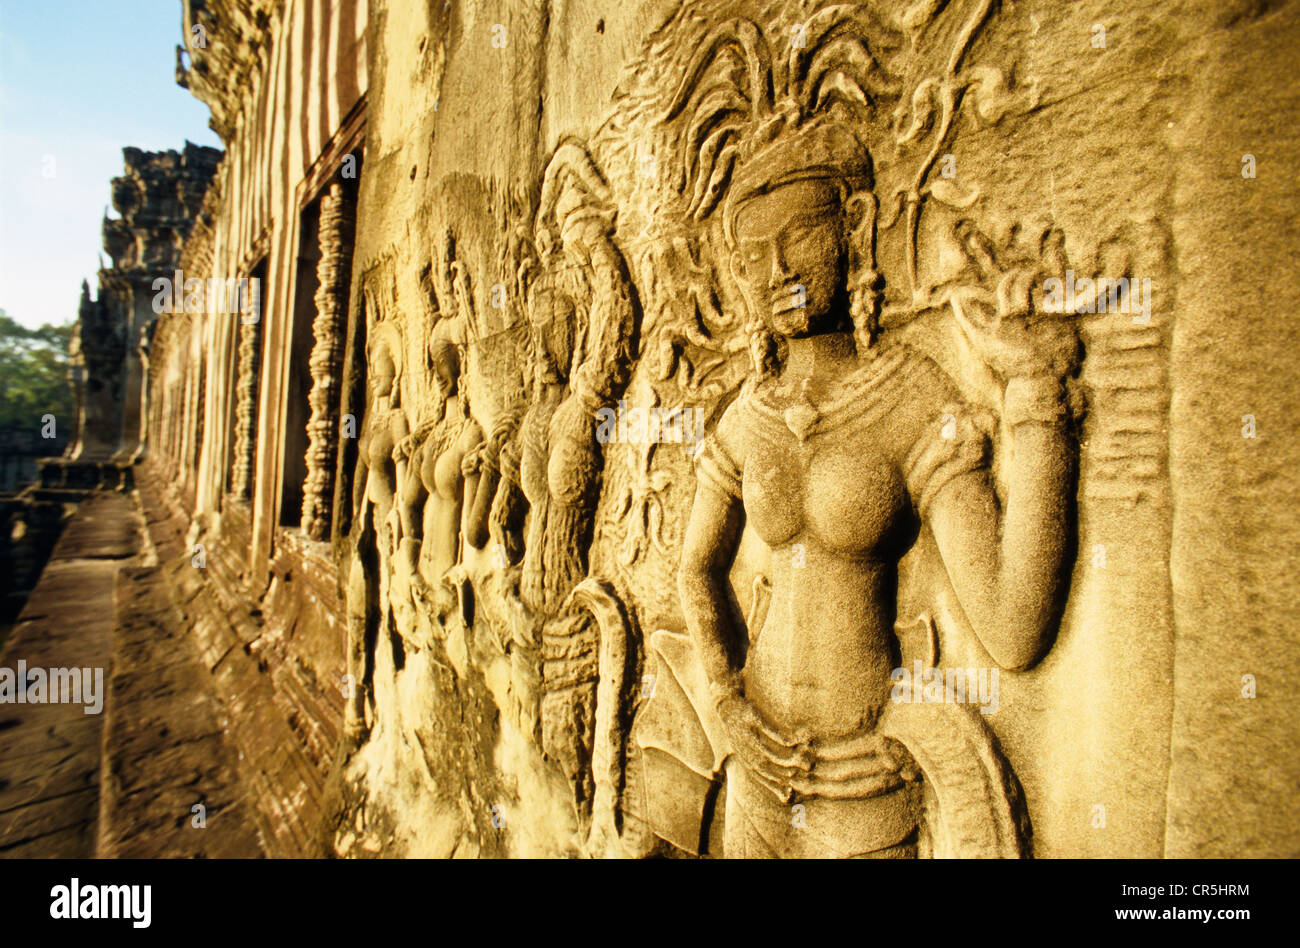 Rock carvings, Angkor Wat, Siem Reap, Cambodia, Southeast Asia Stock Photo